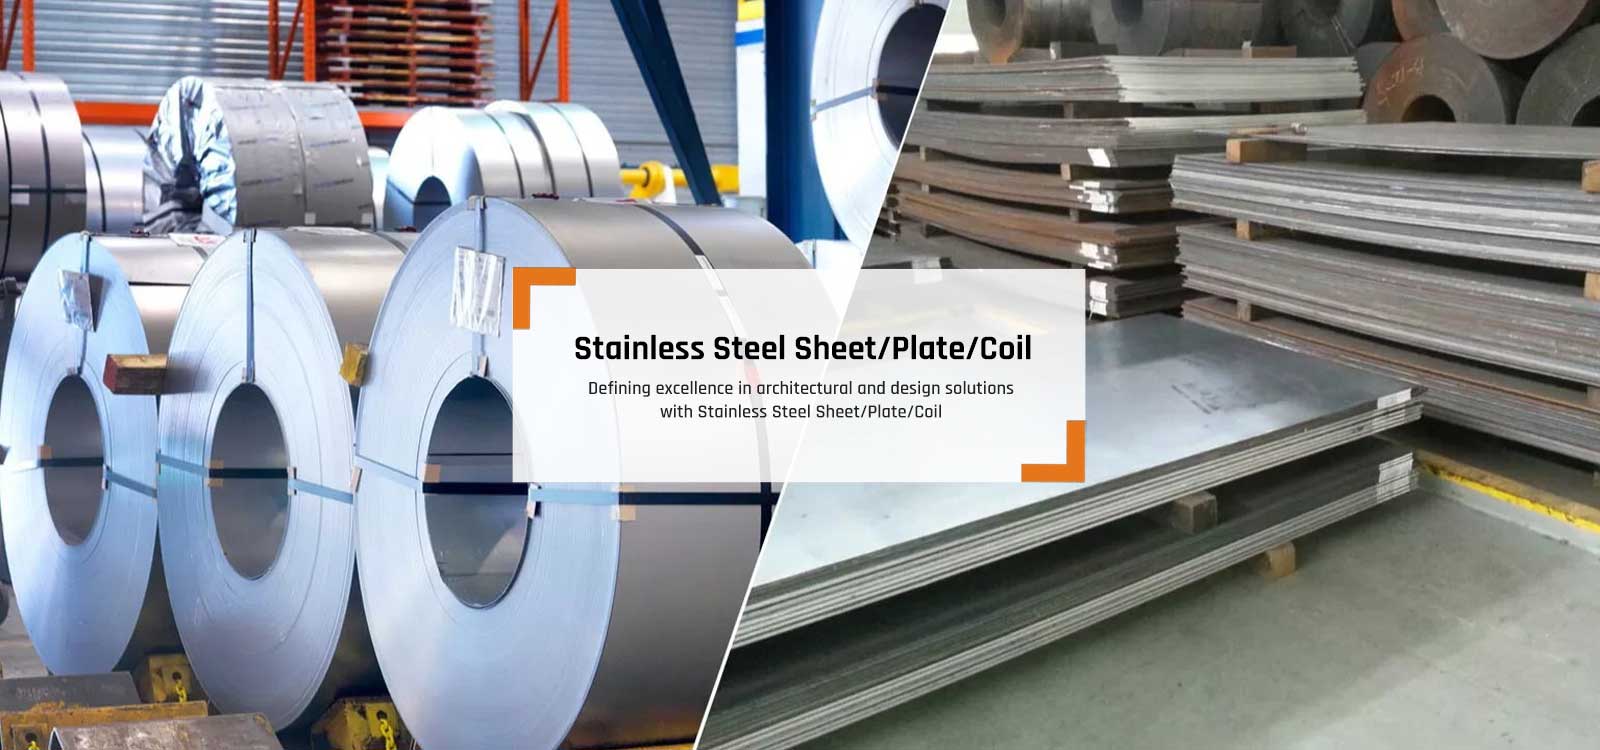 Stainless Steel Sheet Plates Coils Manufacturers in Thiruvananthapuram